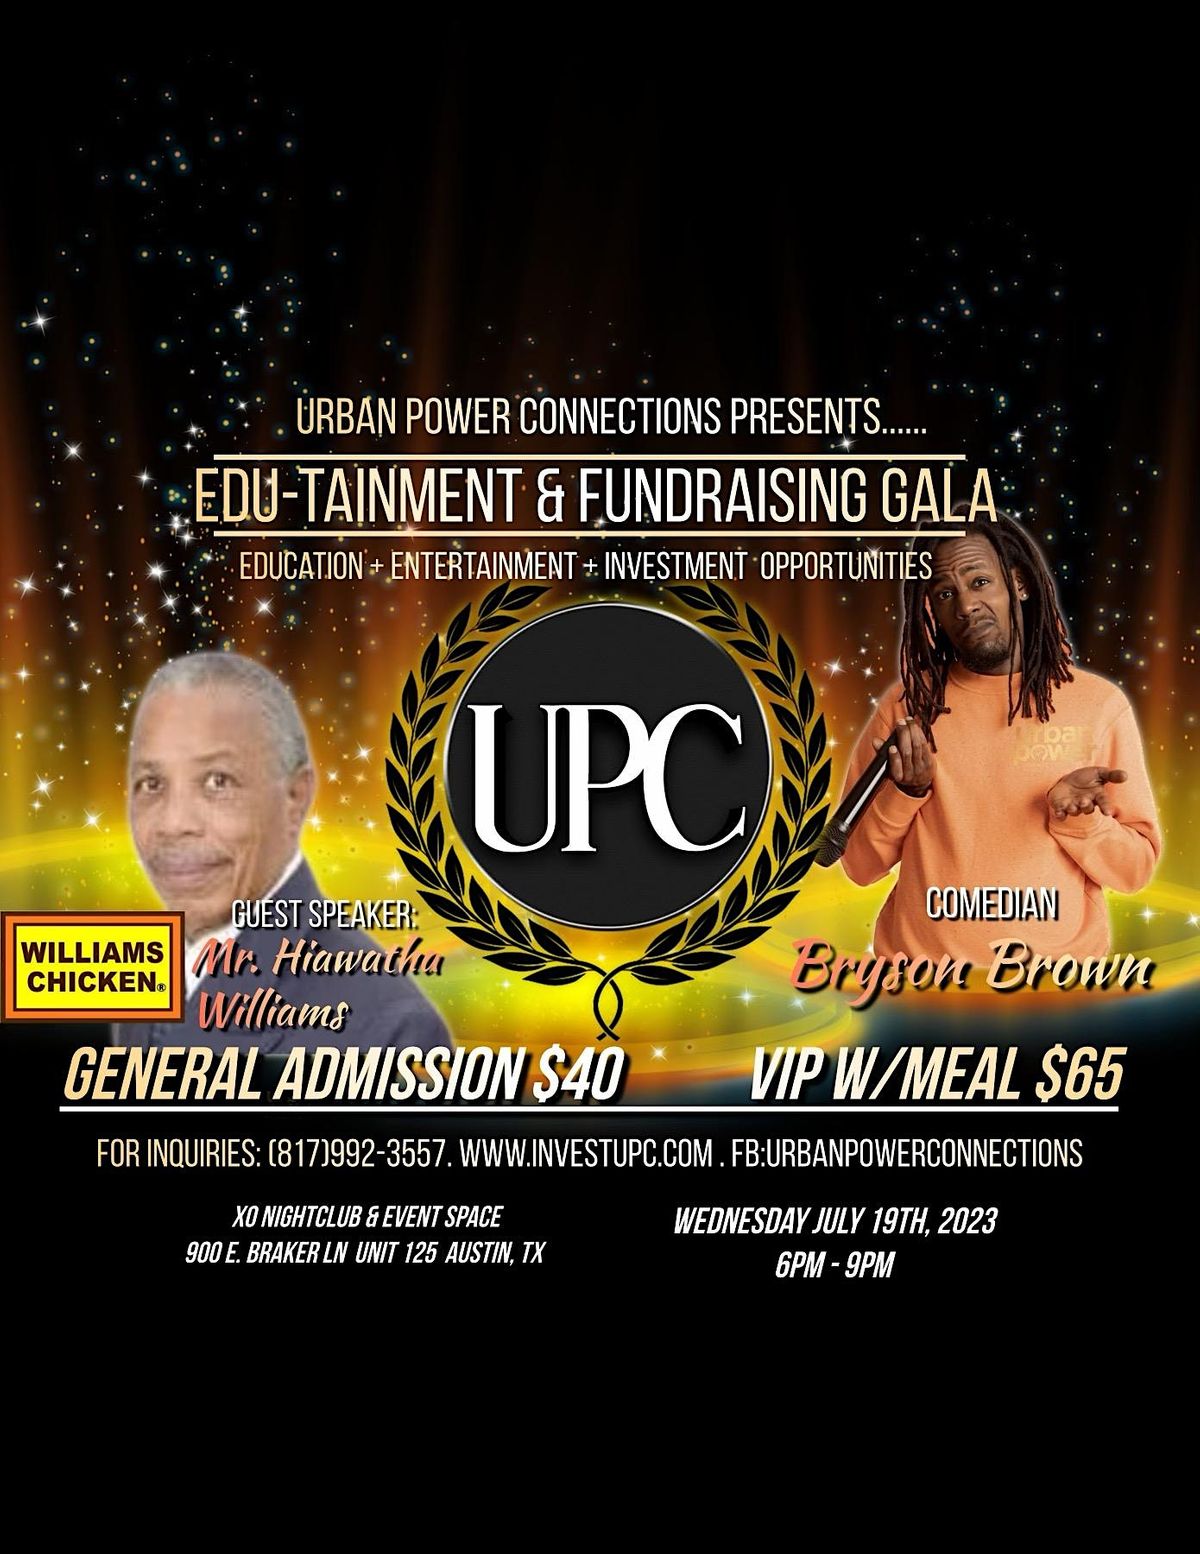 UPC Presents Edutainment & Fundraising Gala